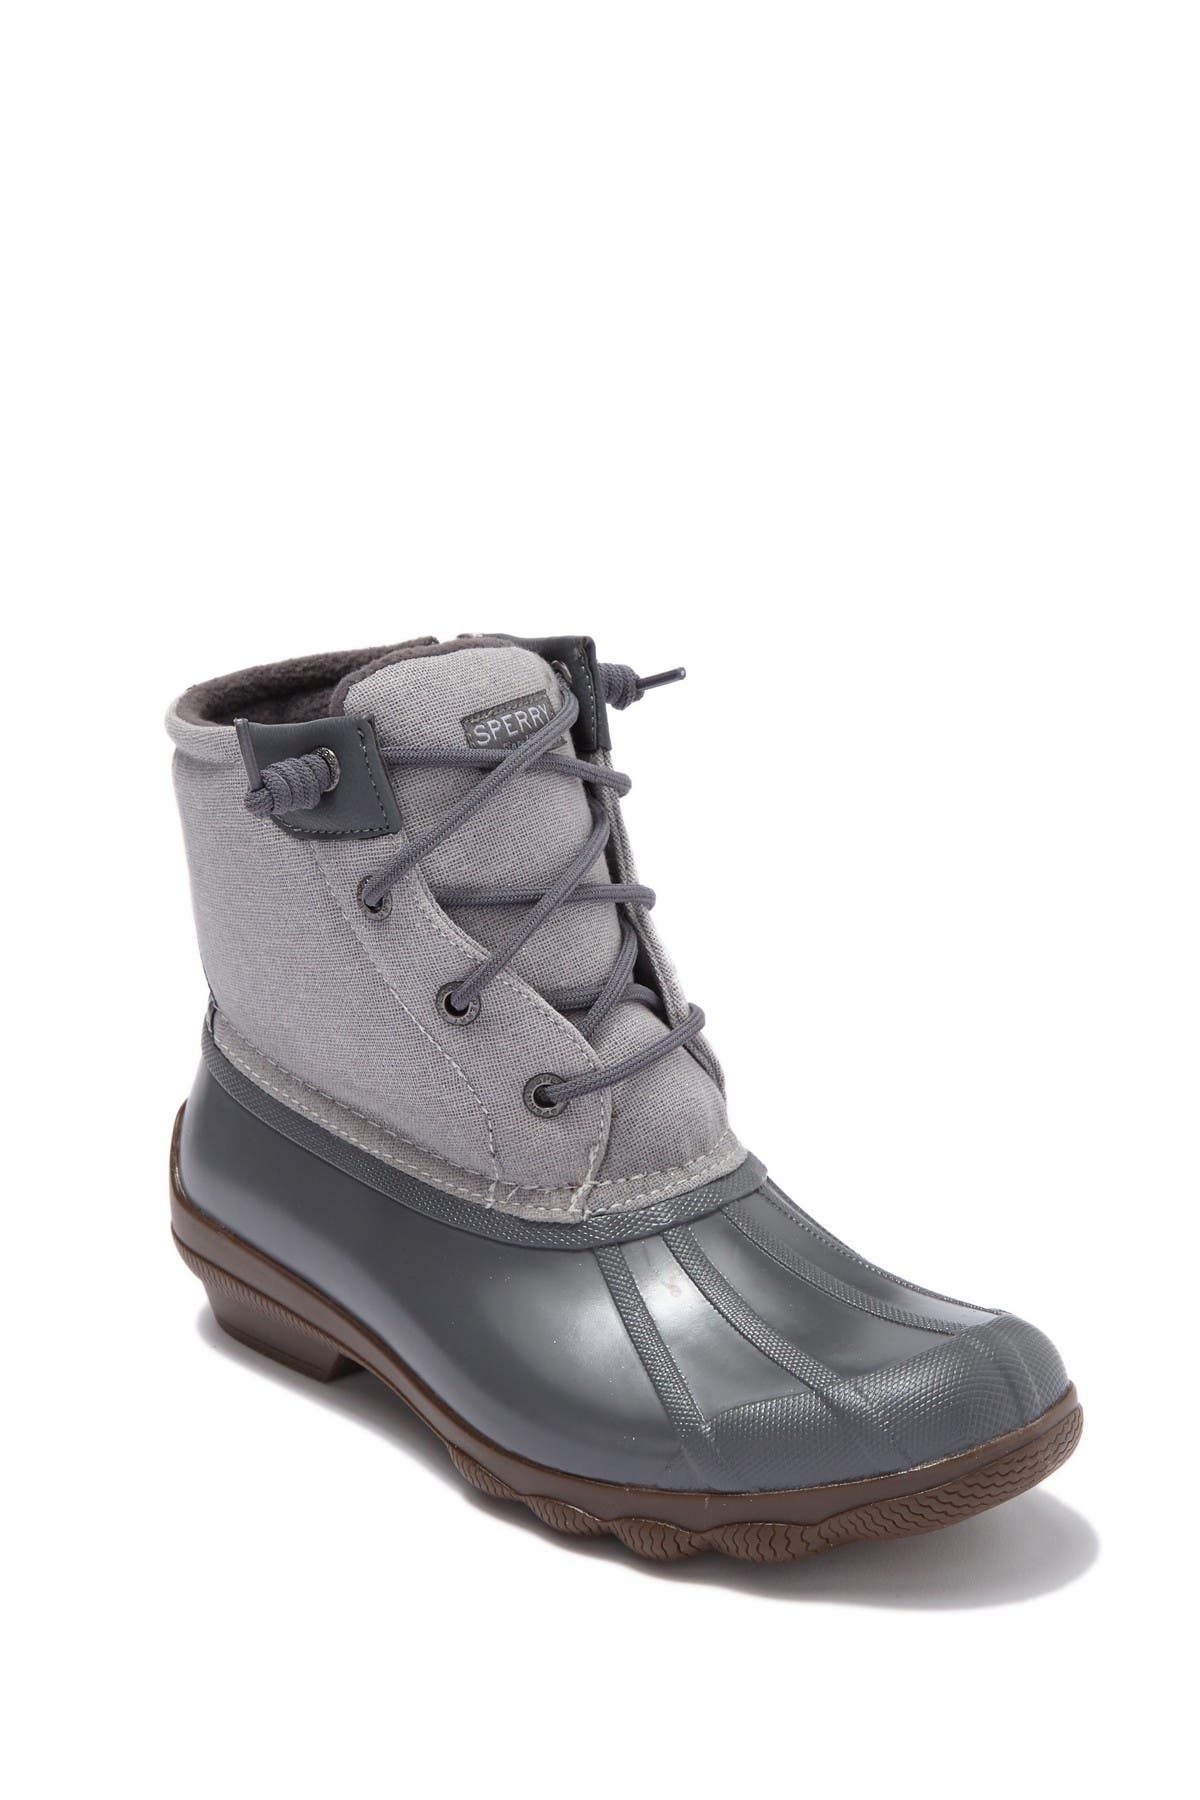 sperry metallic boots